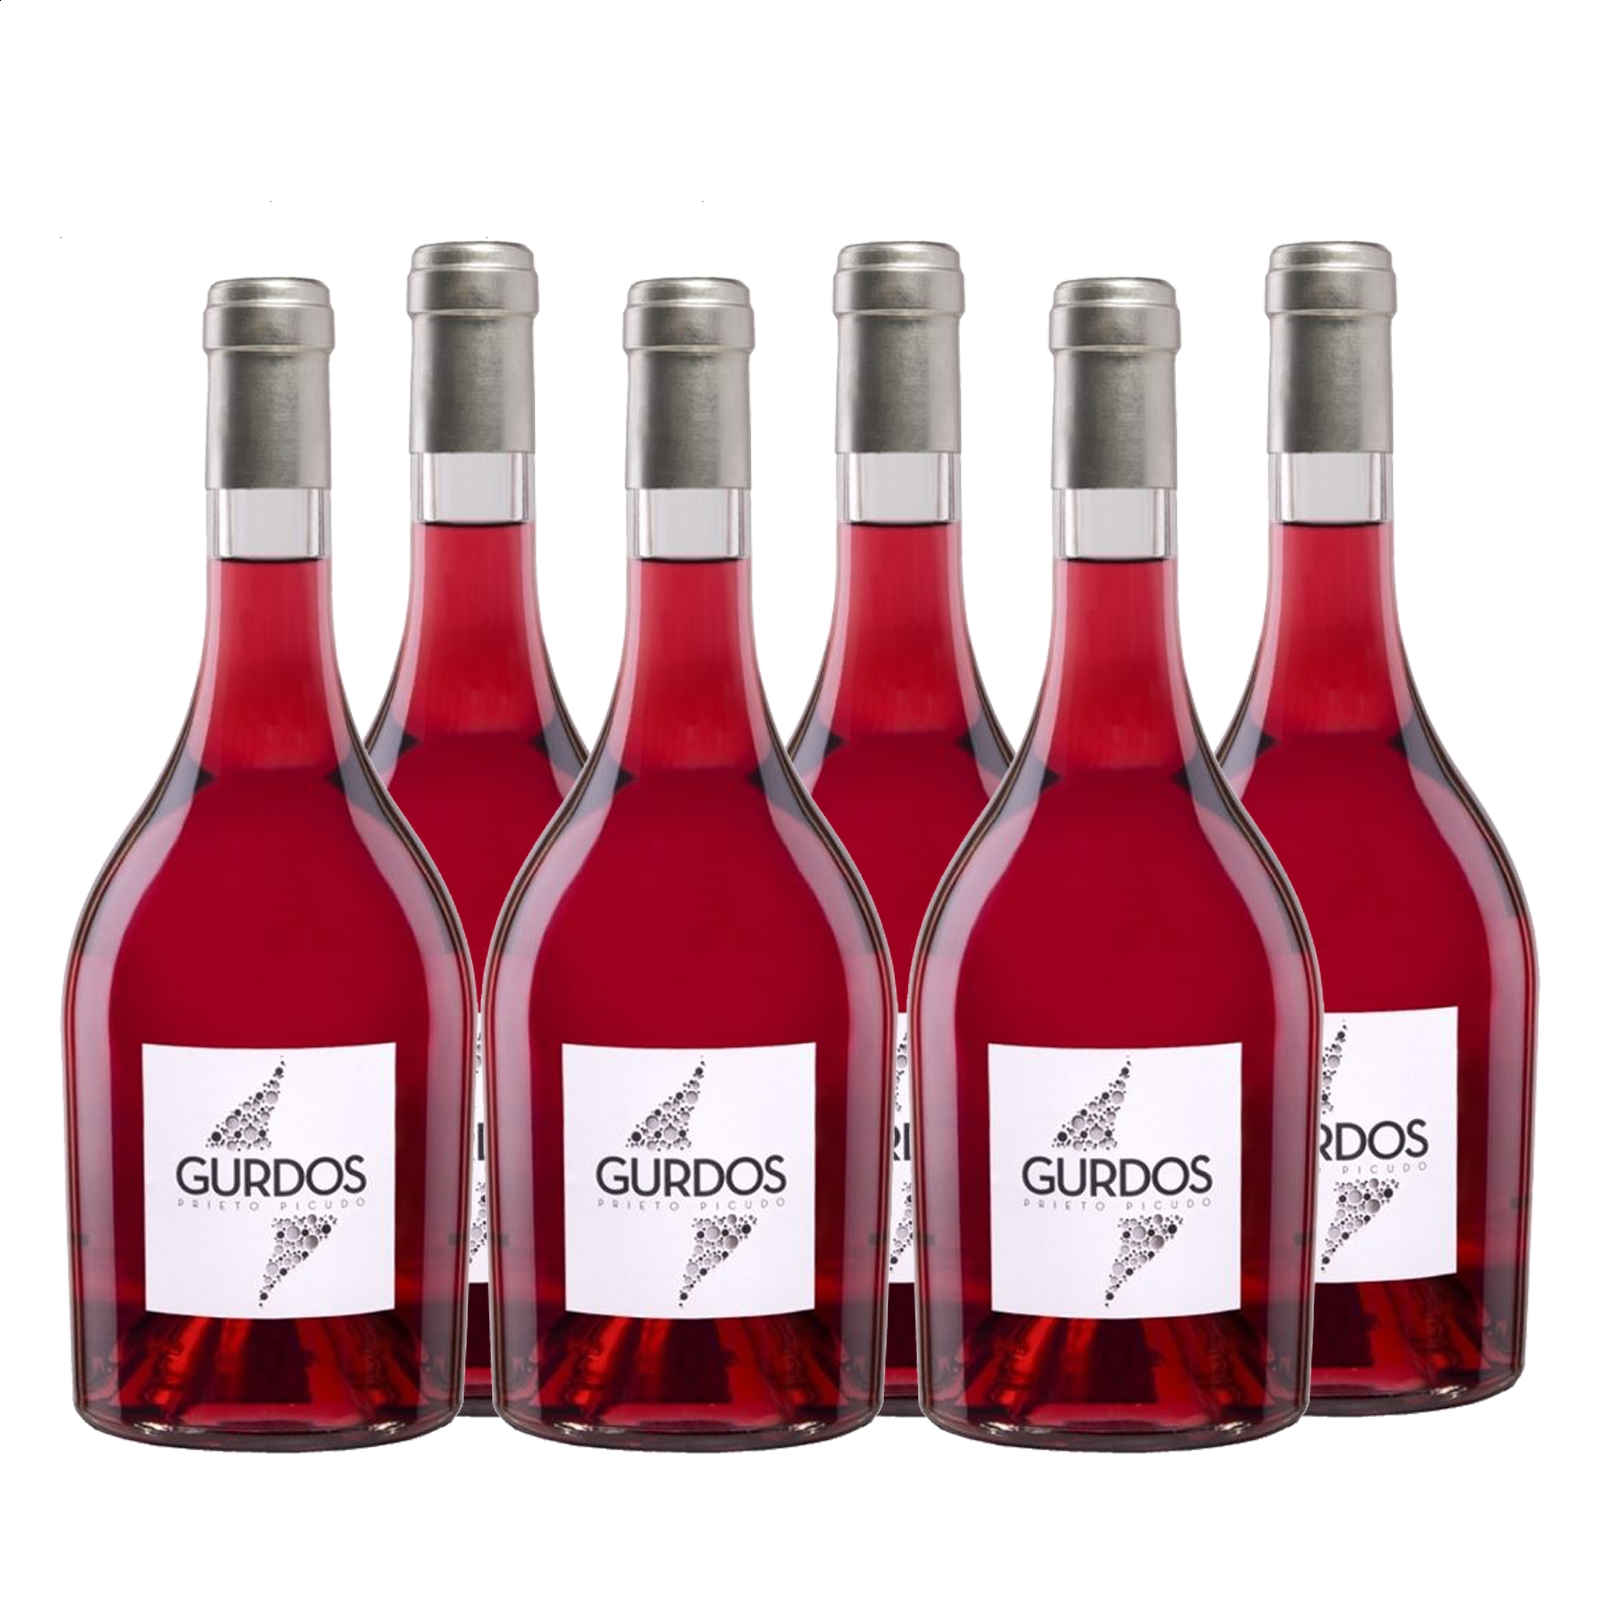 Gurdos - Vino rosado D.O. León 75cl, 6uds